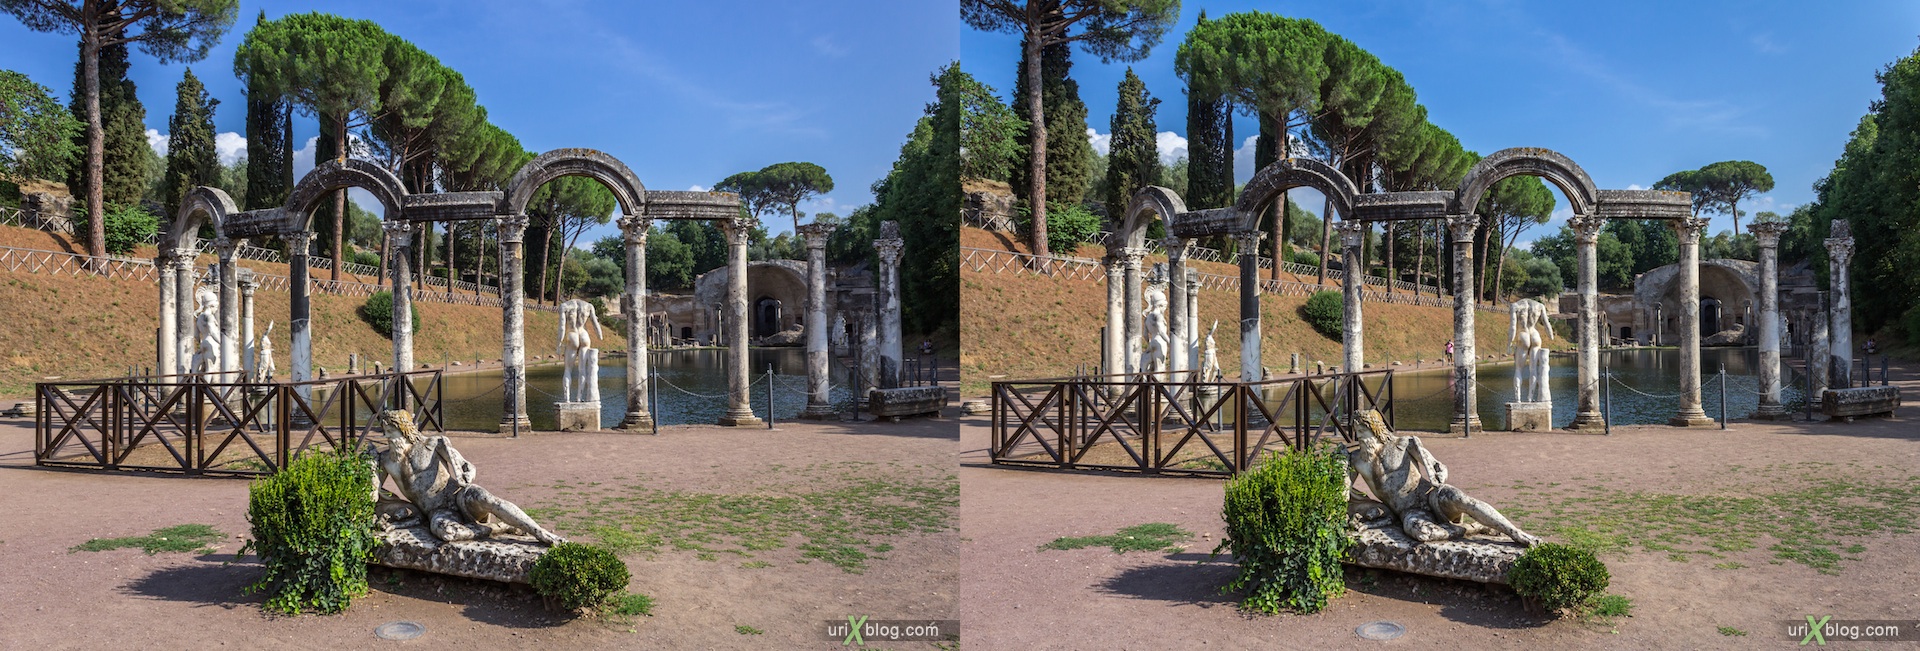 2012, Canopo, Villa Adriana, Italy, Tivoli, Ancient Rome, 3D, stereo pair, cross-eyed, crossview, cross view stereo pair